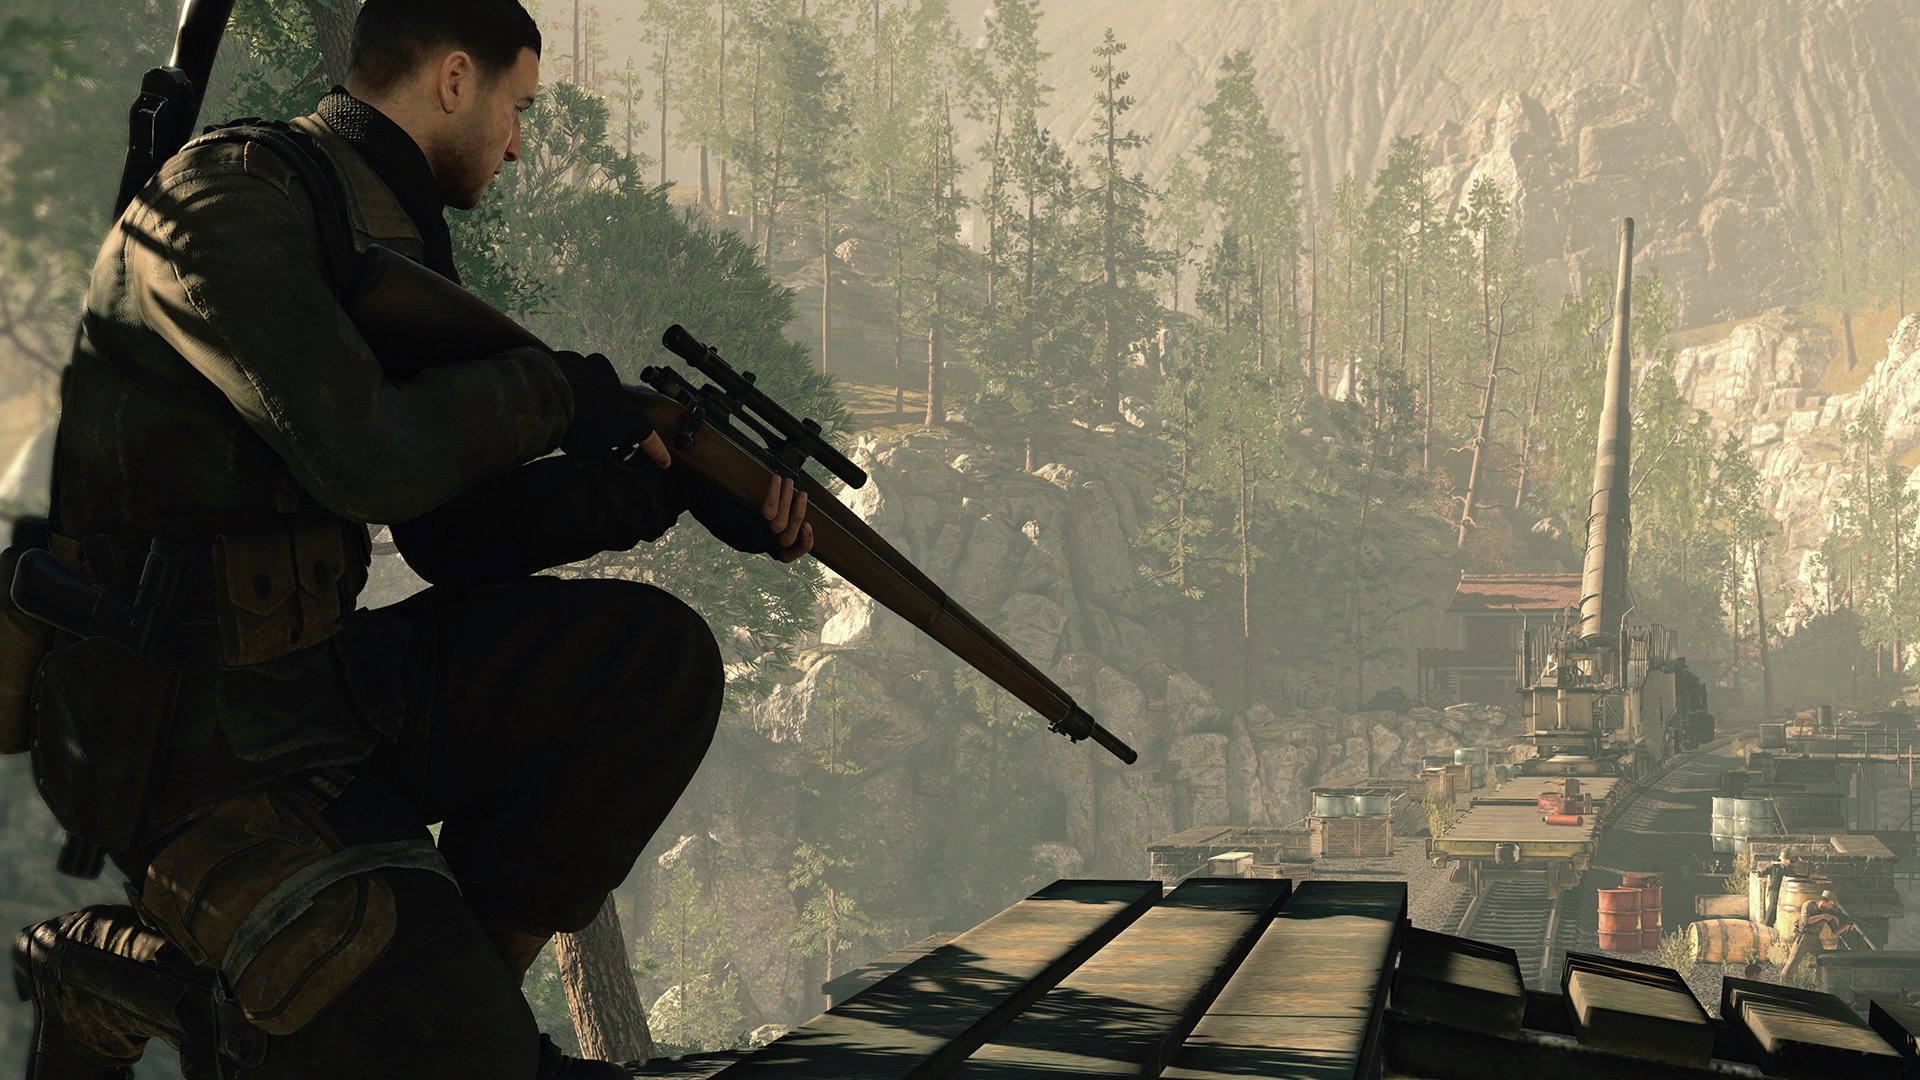 Sniper Elite 4 PS4 Game. Review